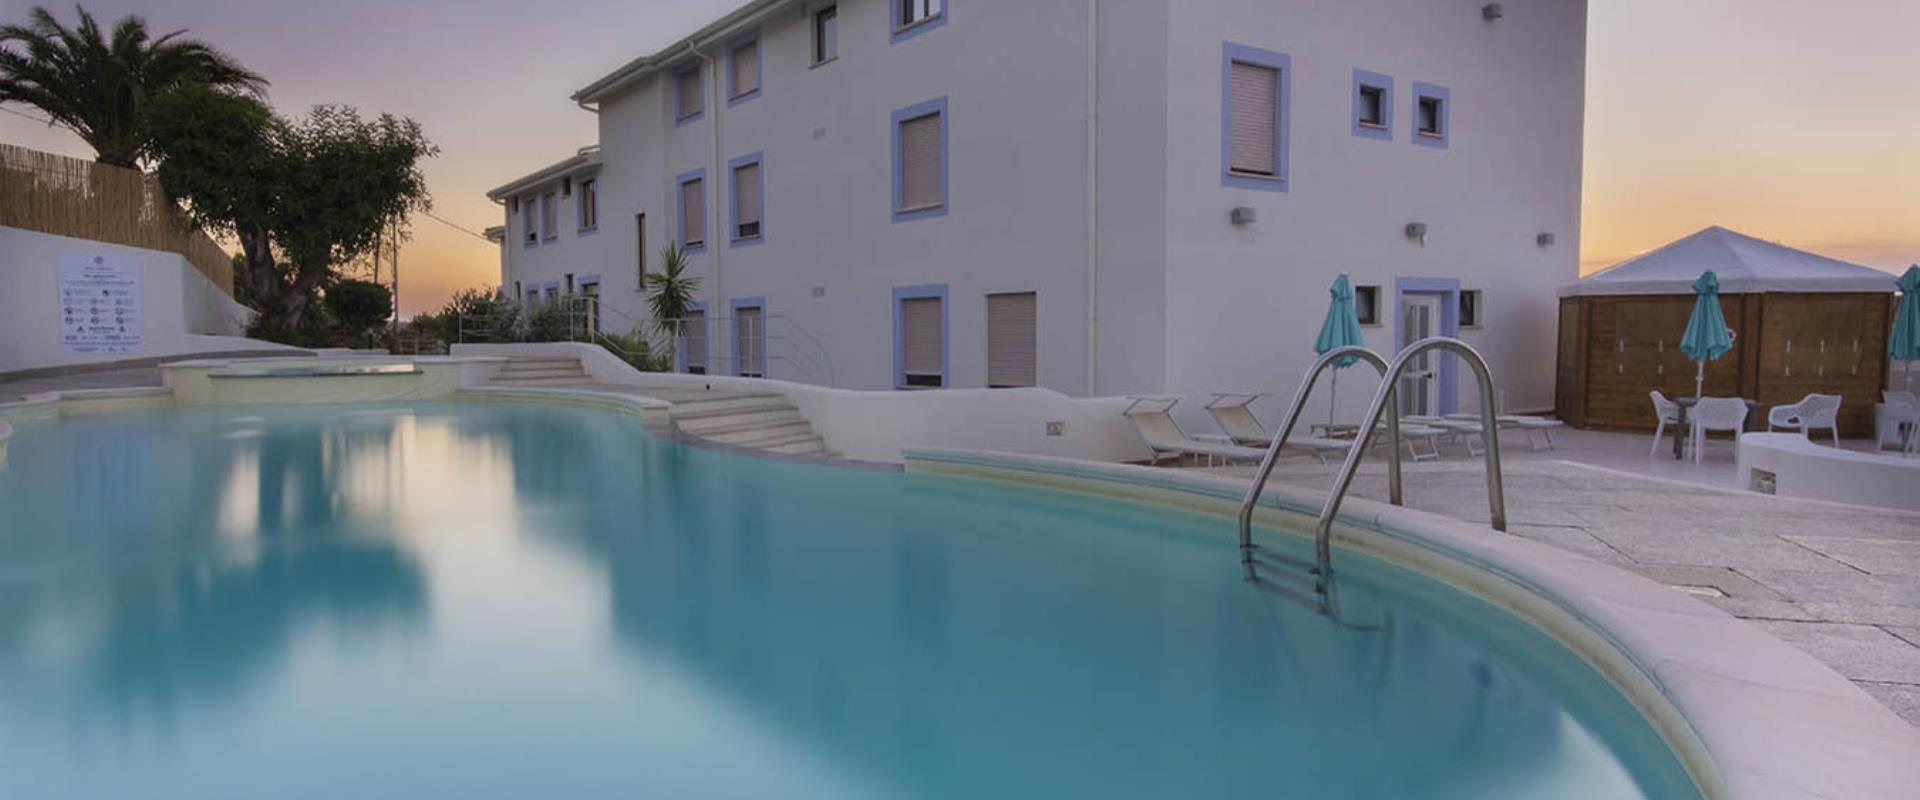 The swimming pool of the Hotel Blumarea in Lu Bagnu - Castelsardo